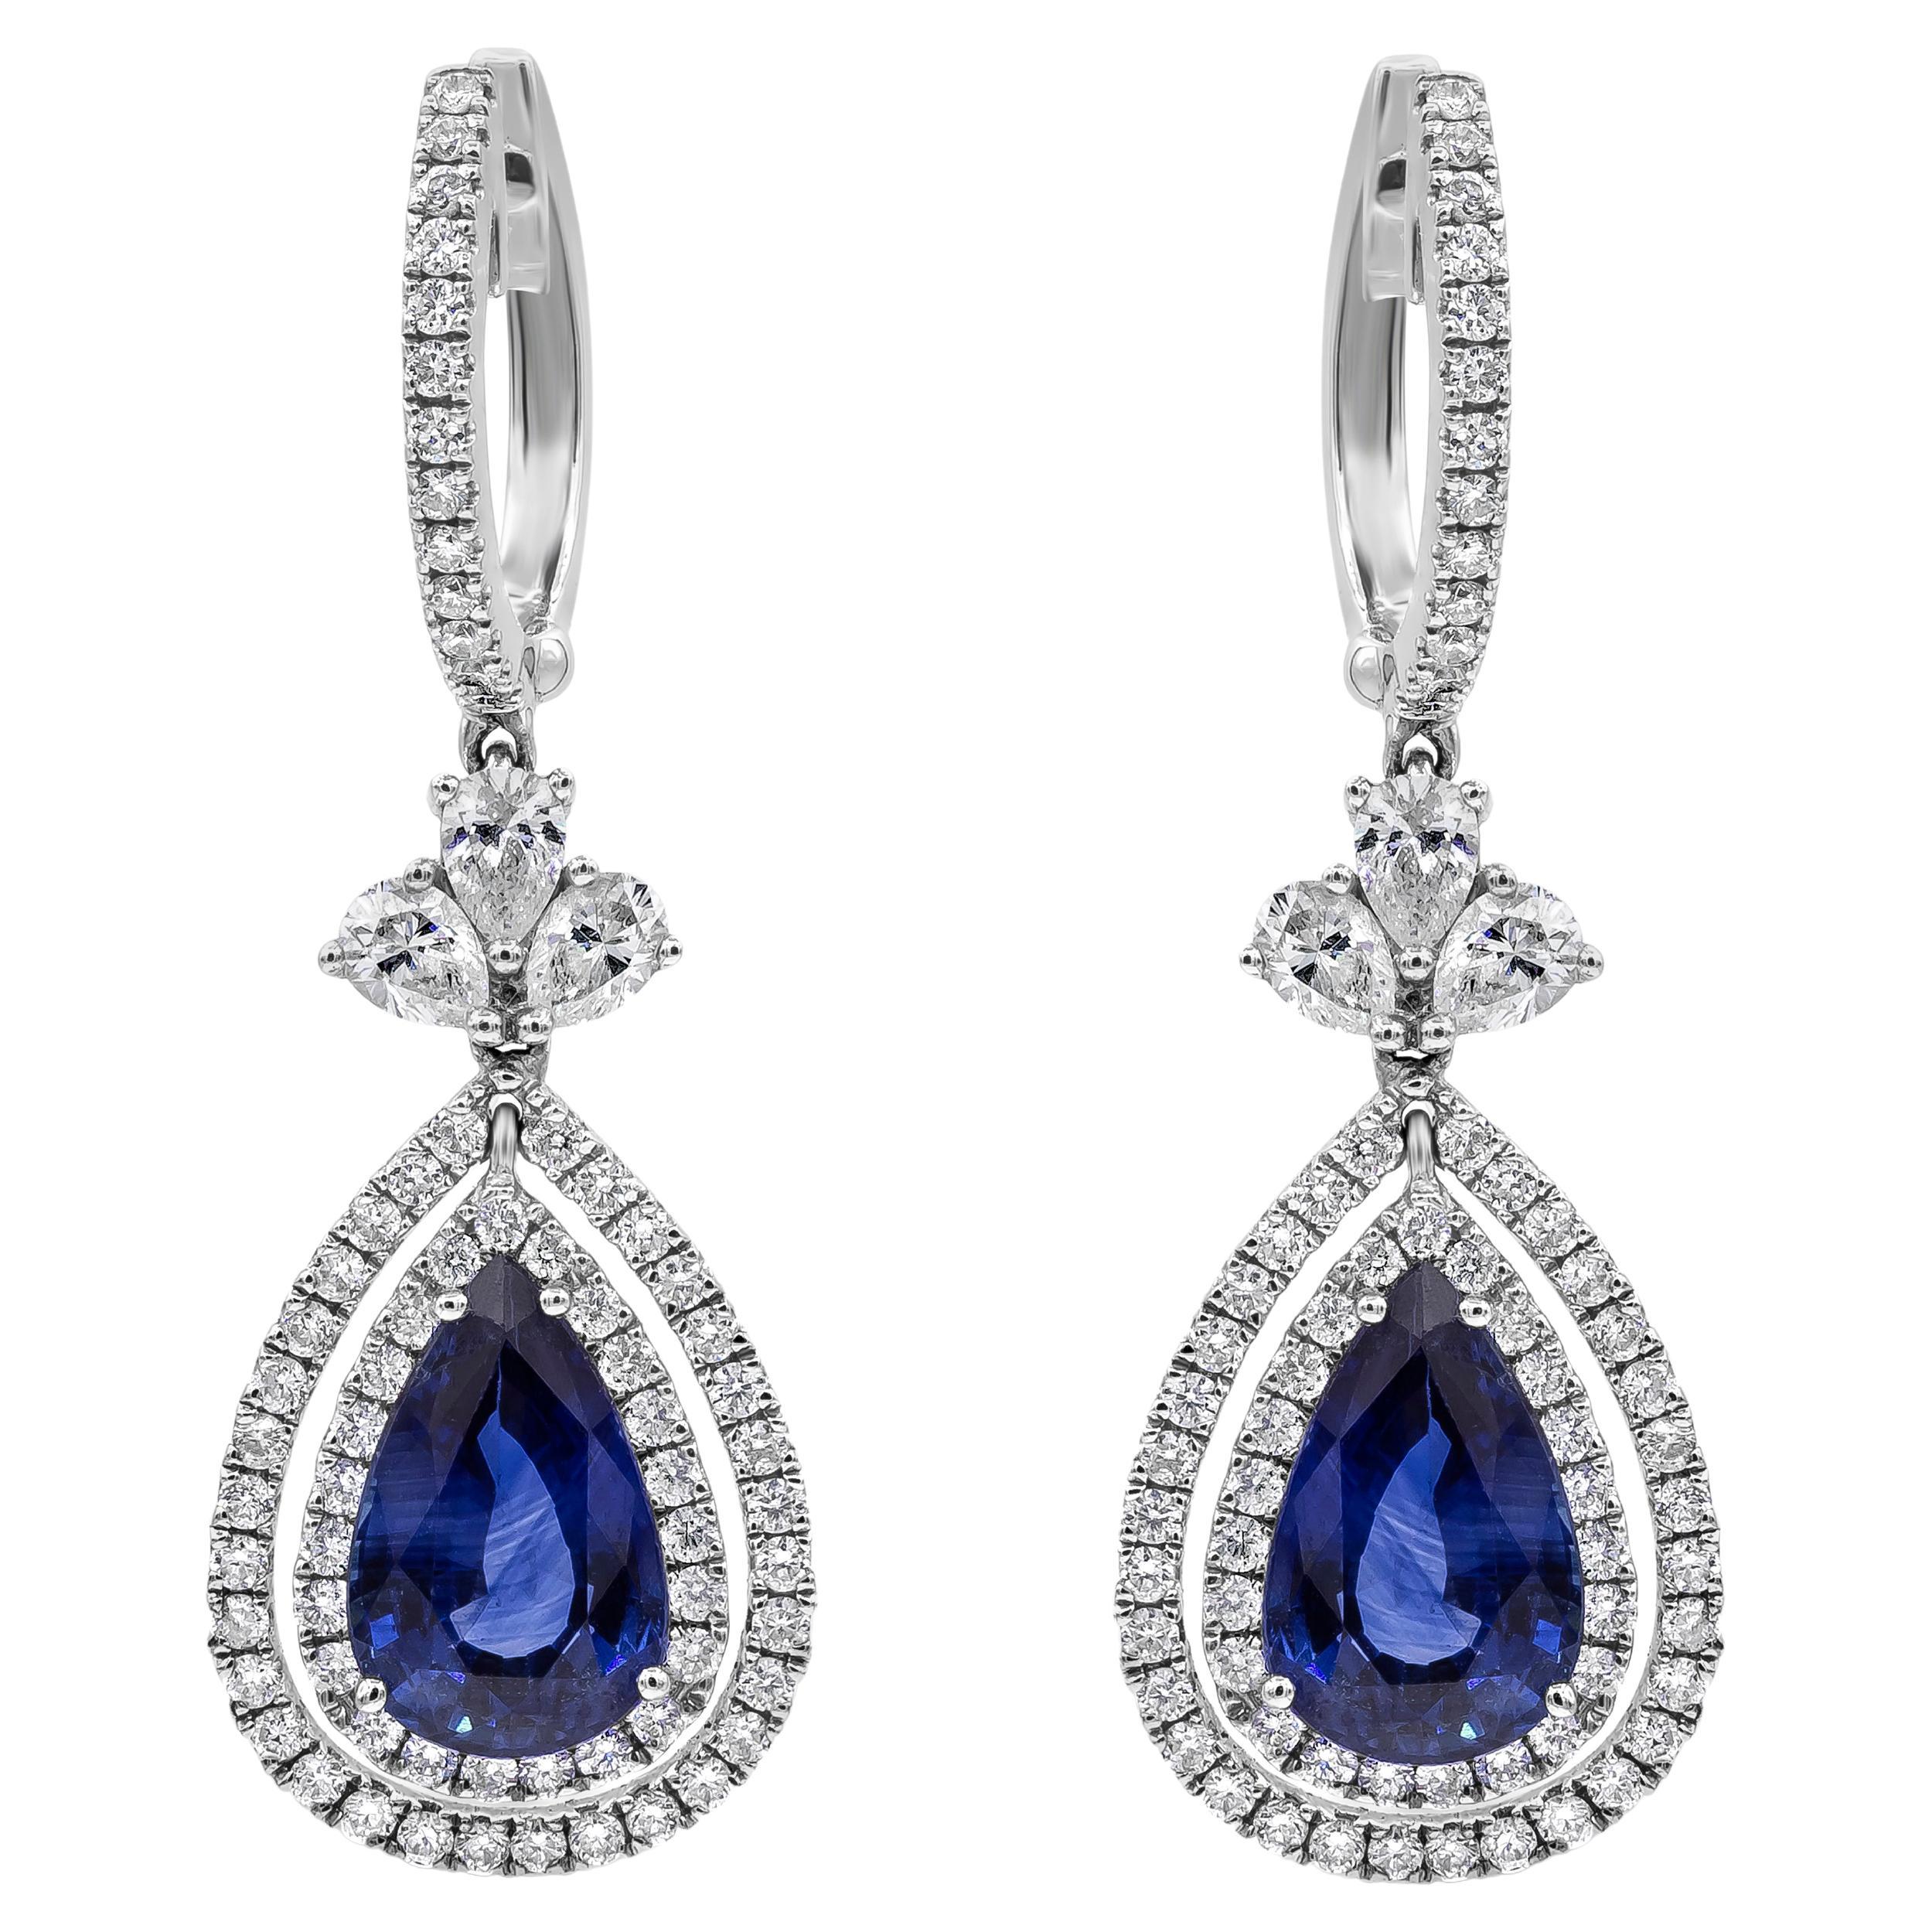 Roman Malakov 4.18 Carat Blue Sapphire And Diamond Double Halo Dangle Earrings